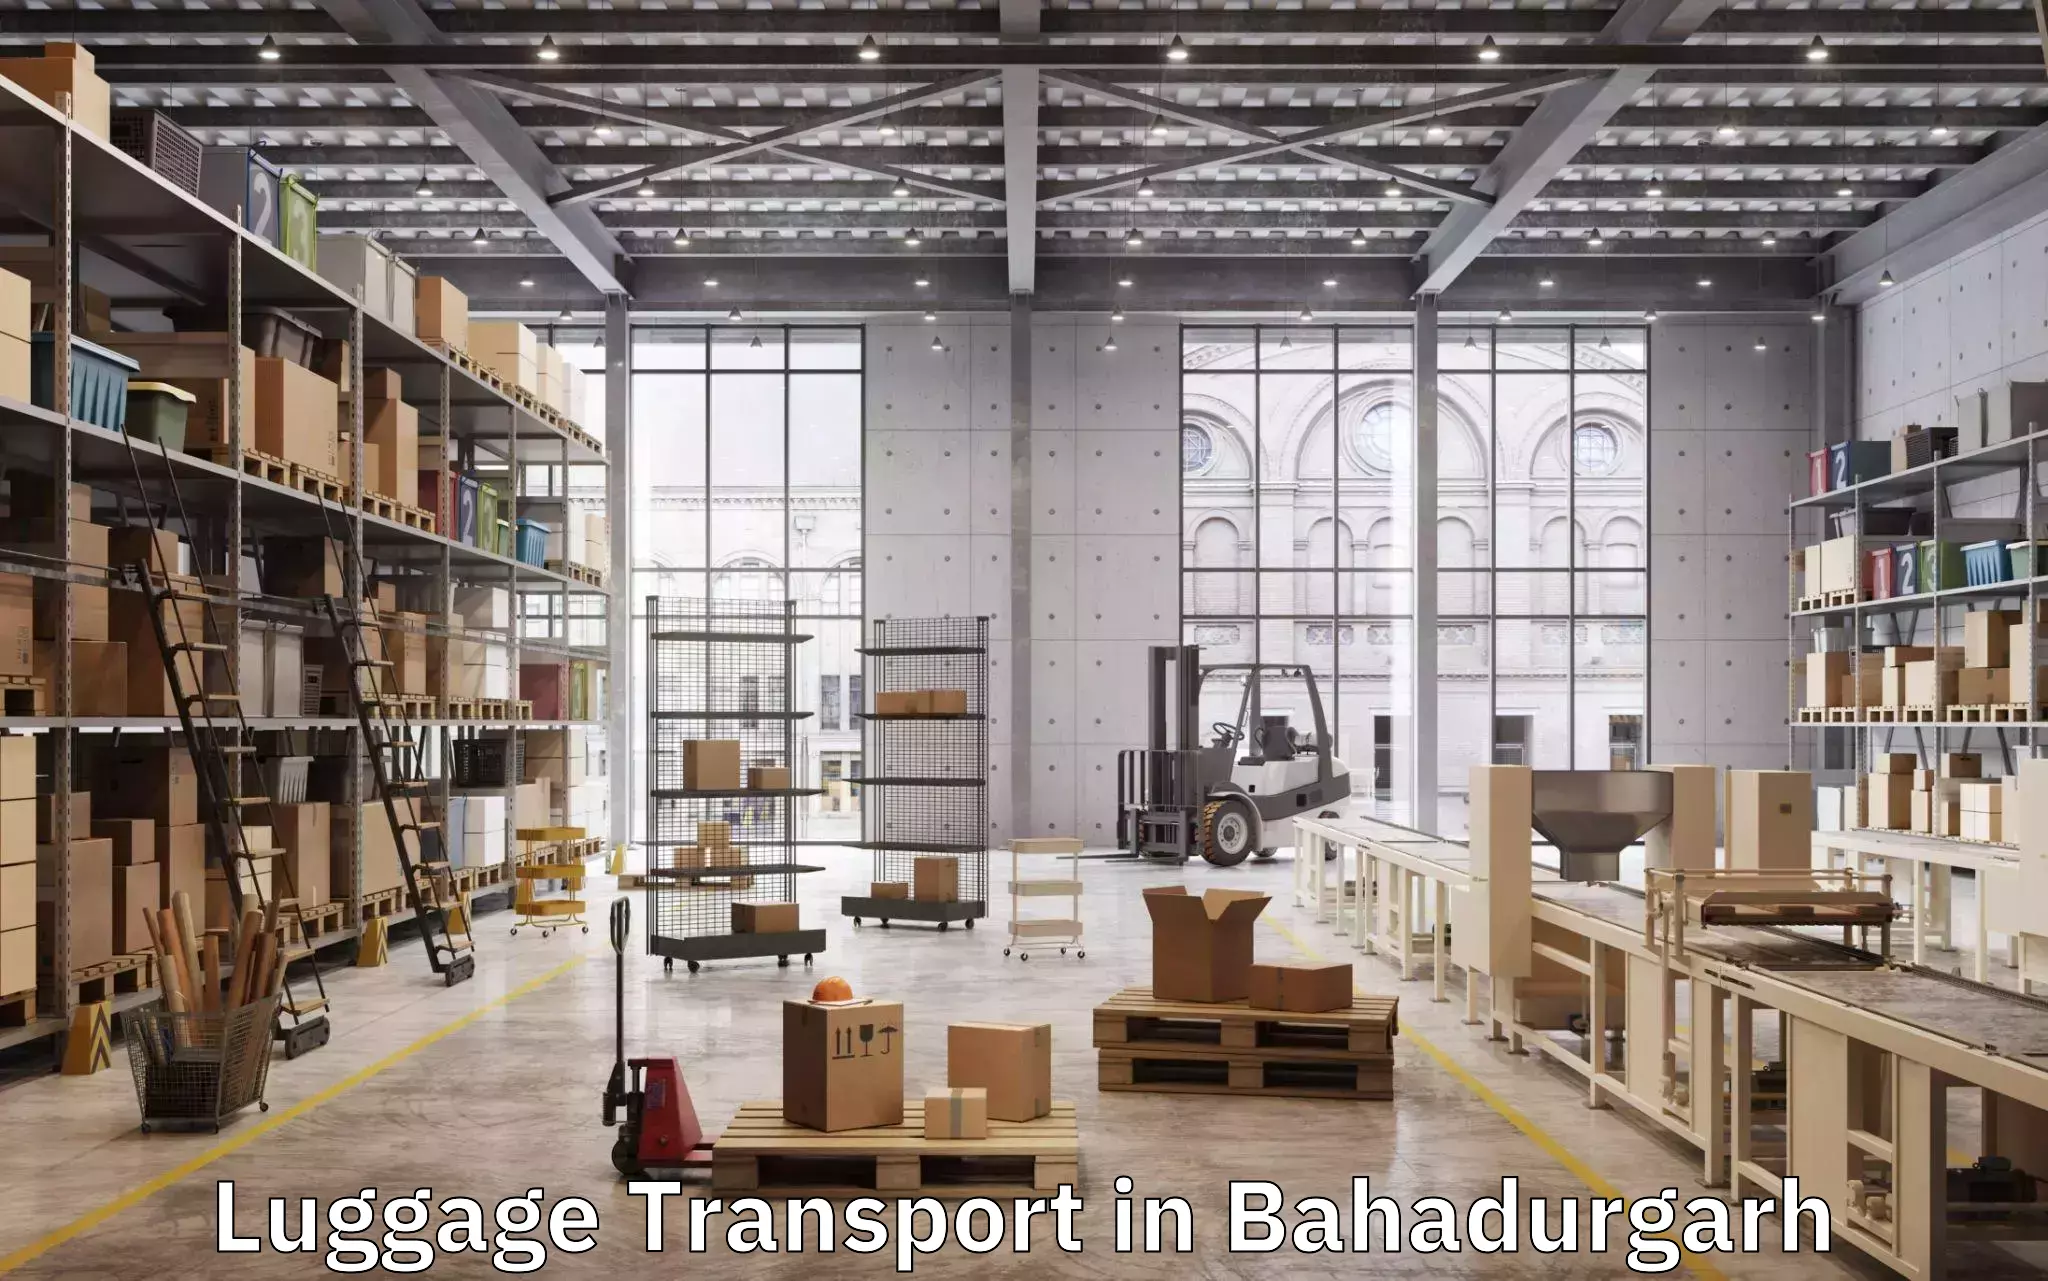 Luggage shipment processing in Bahadurgarh